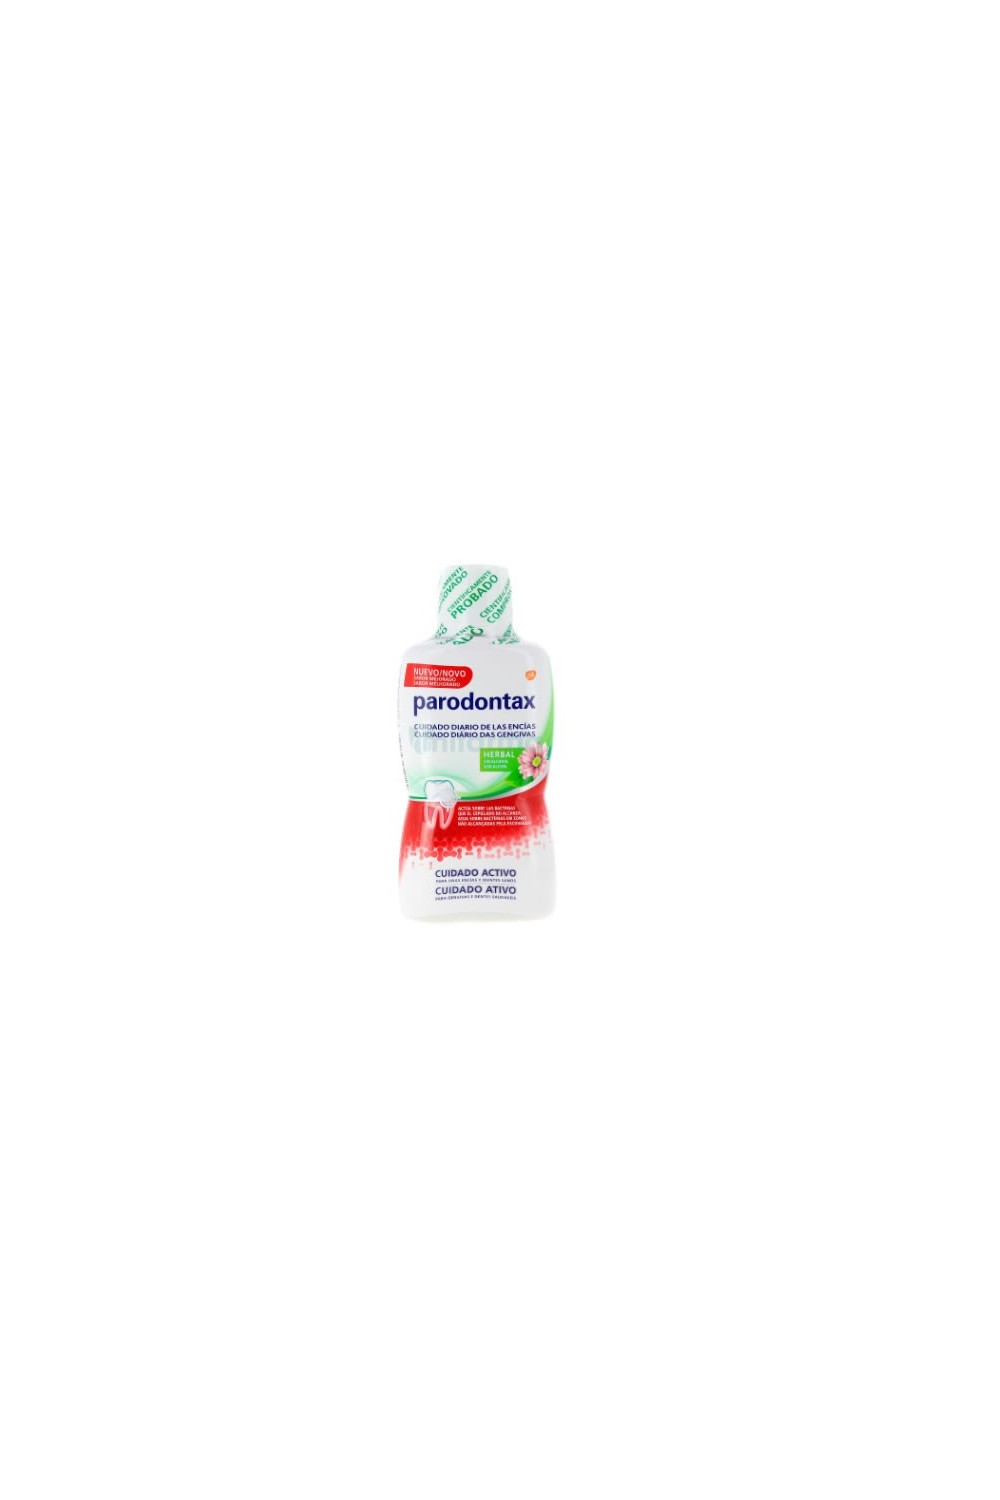 Parodontax Herbal Daily Gum Care 500ml